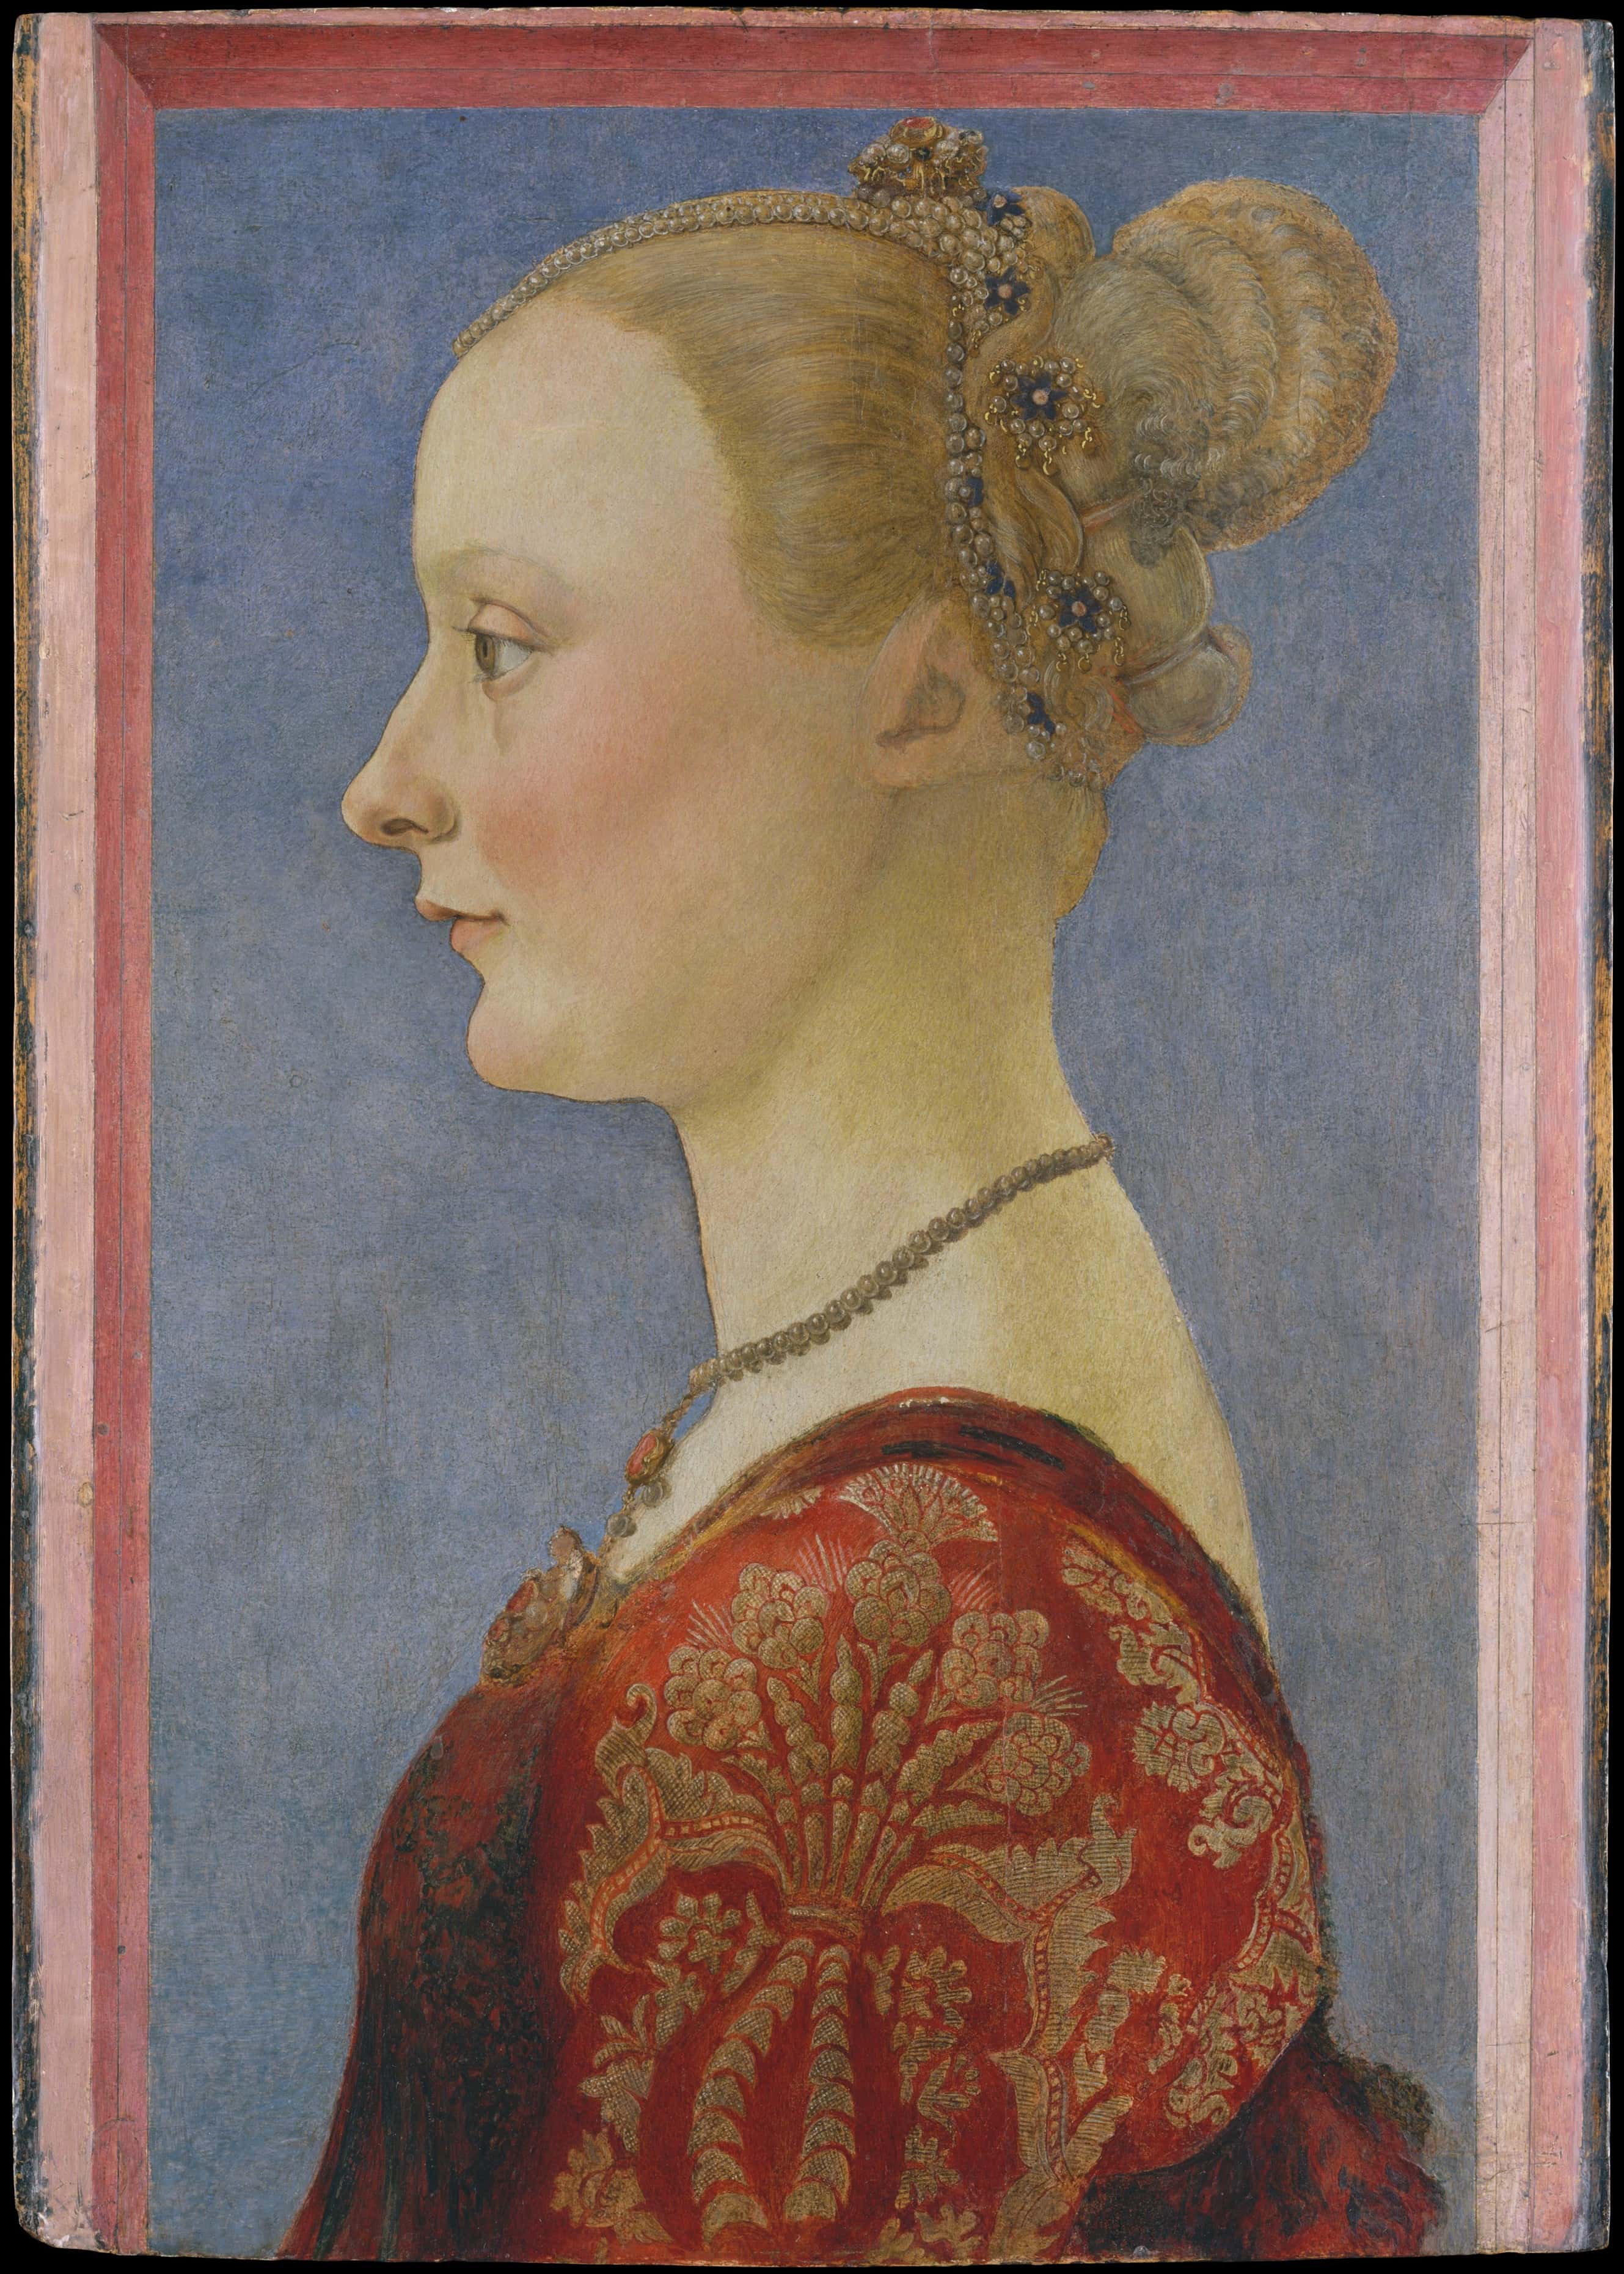 Piero del Pollaiuolo, Portrait of a Woman, c. 1480, tempera on wood, 48.9 c 35.2 cm (The Metropolitan Museum of Art)